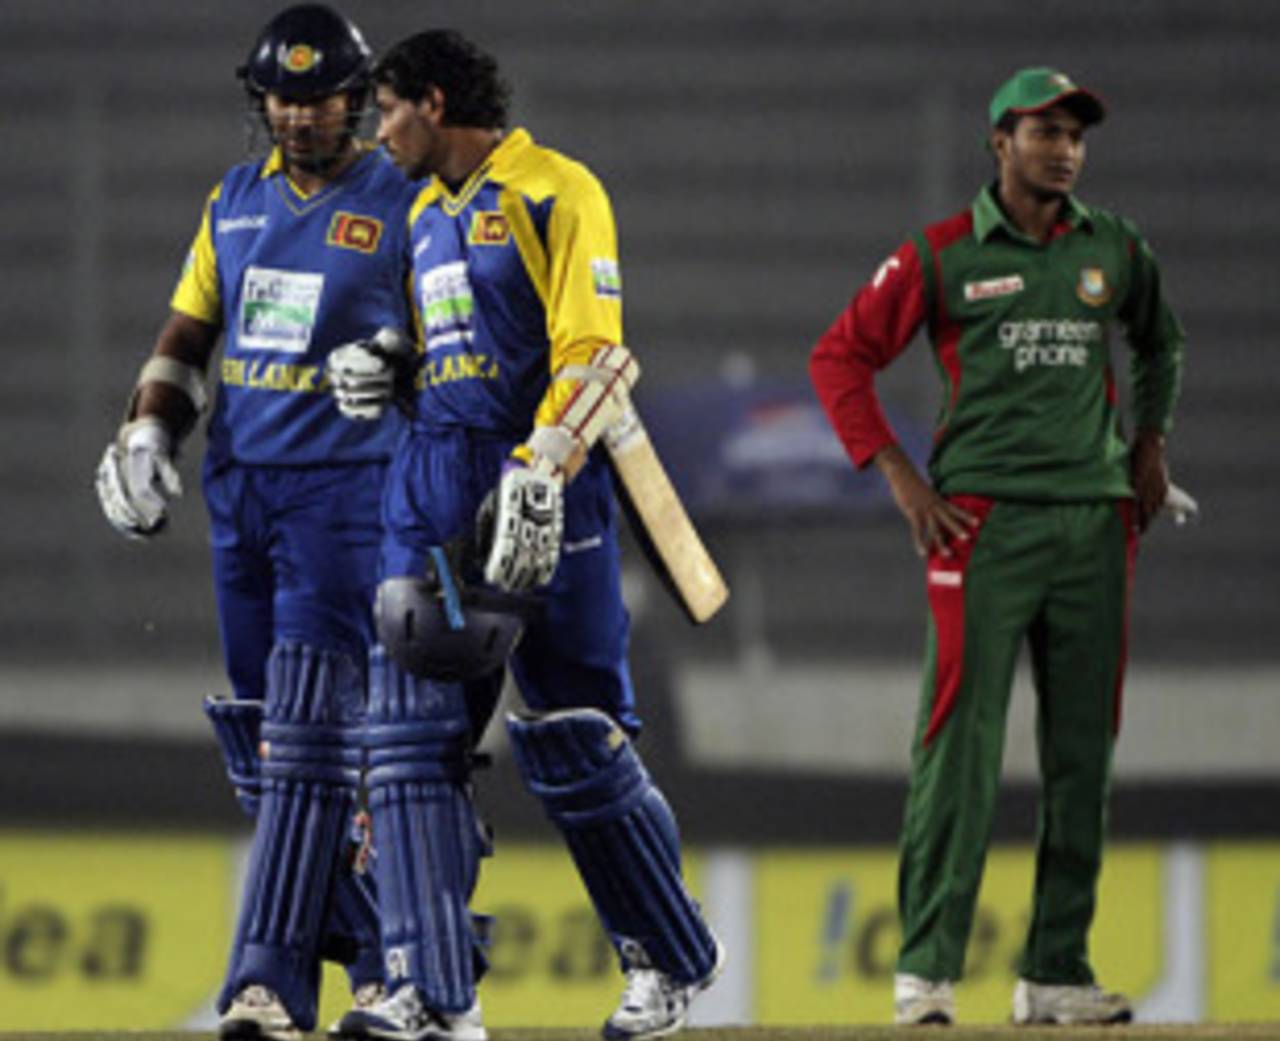 Kumar Sangakkara and Tillakaratne Dilshan bring up their century stand as Shakib Al Hasan looks forlorn, Bangladesh v Sri Lanka, tri-nation tournament, 1st match, Mirpur, January 4, 2010